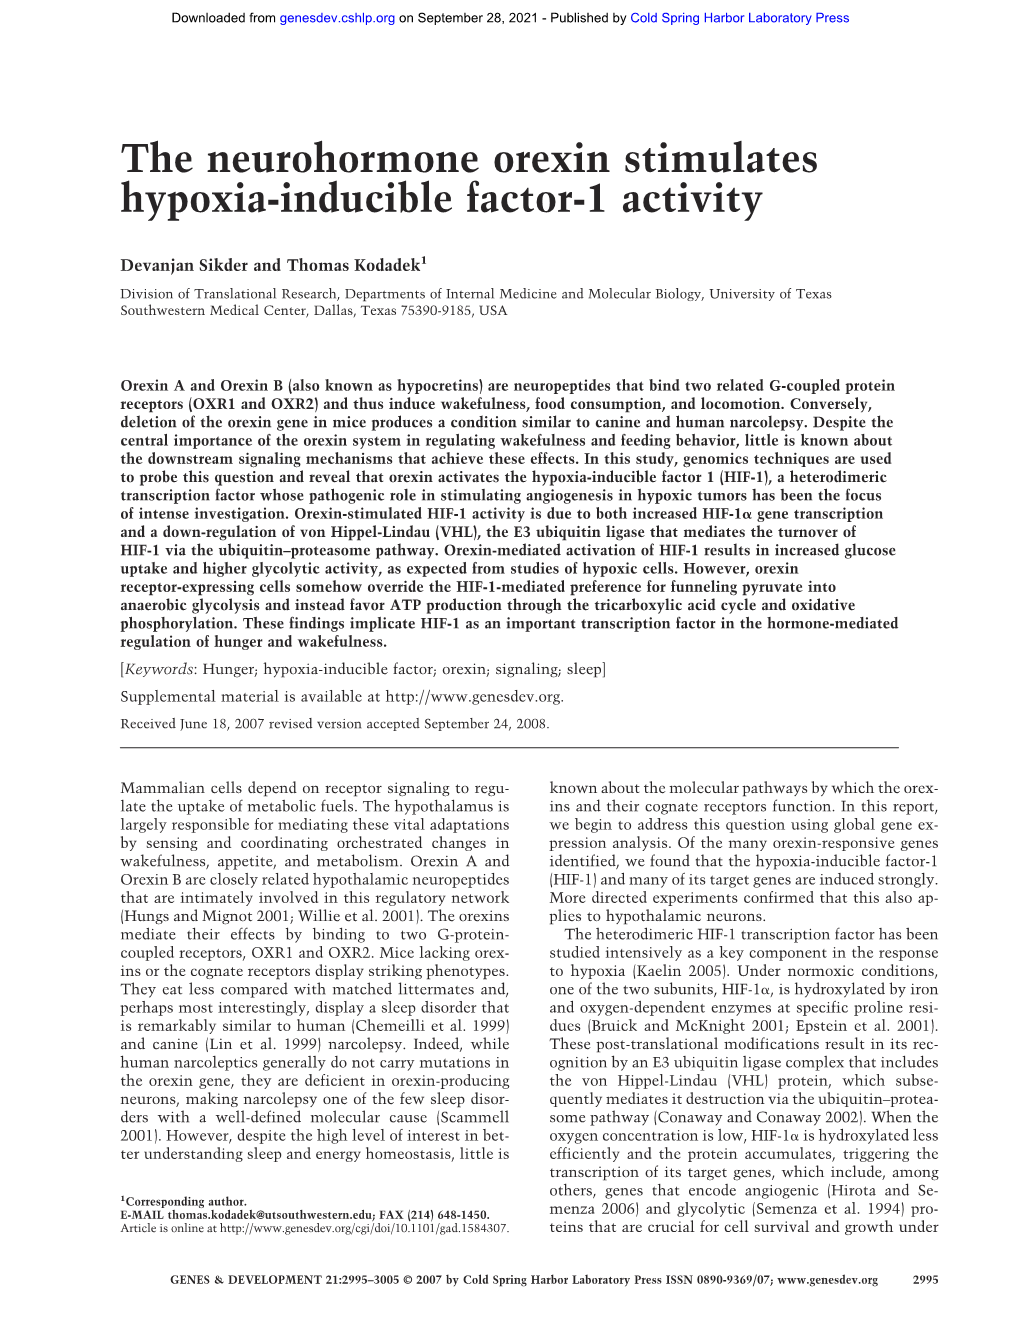 The Neurohormone Orexin Stimulates Hypoxia-Inducible Factor-1 Activity